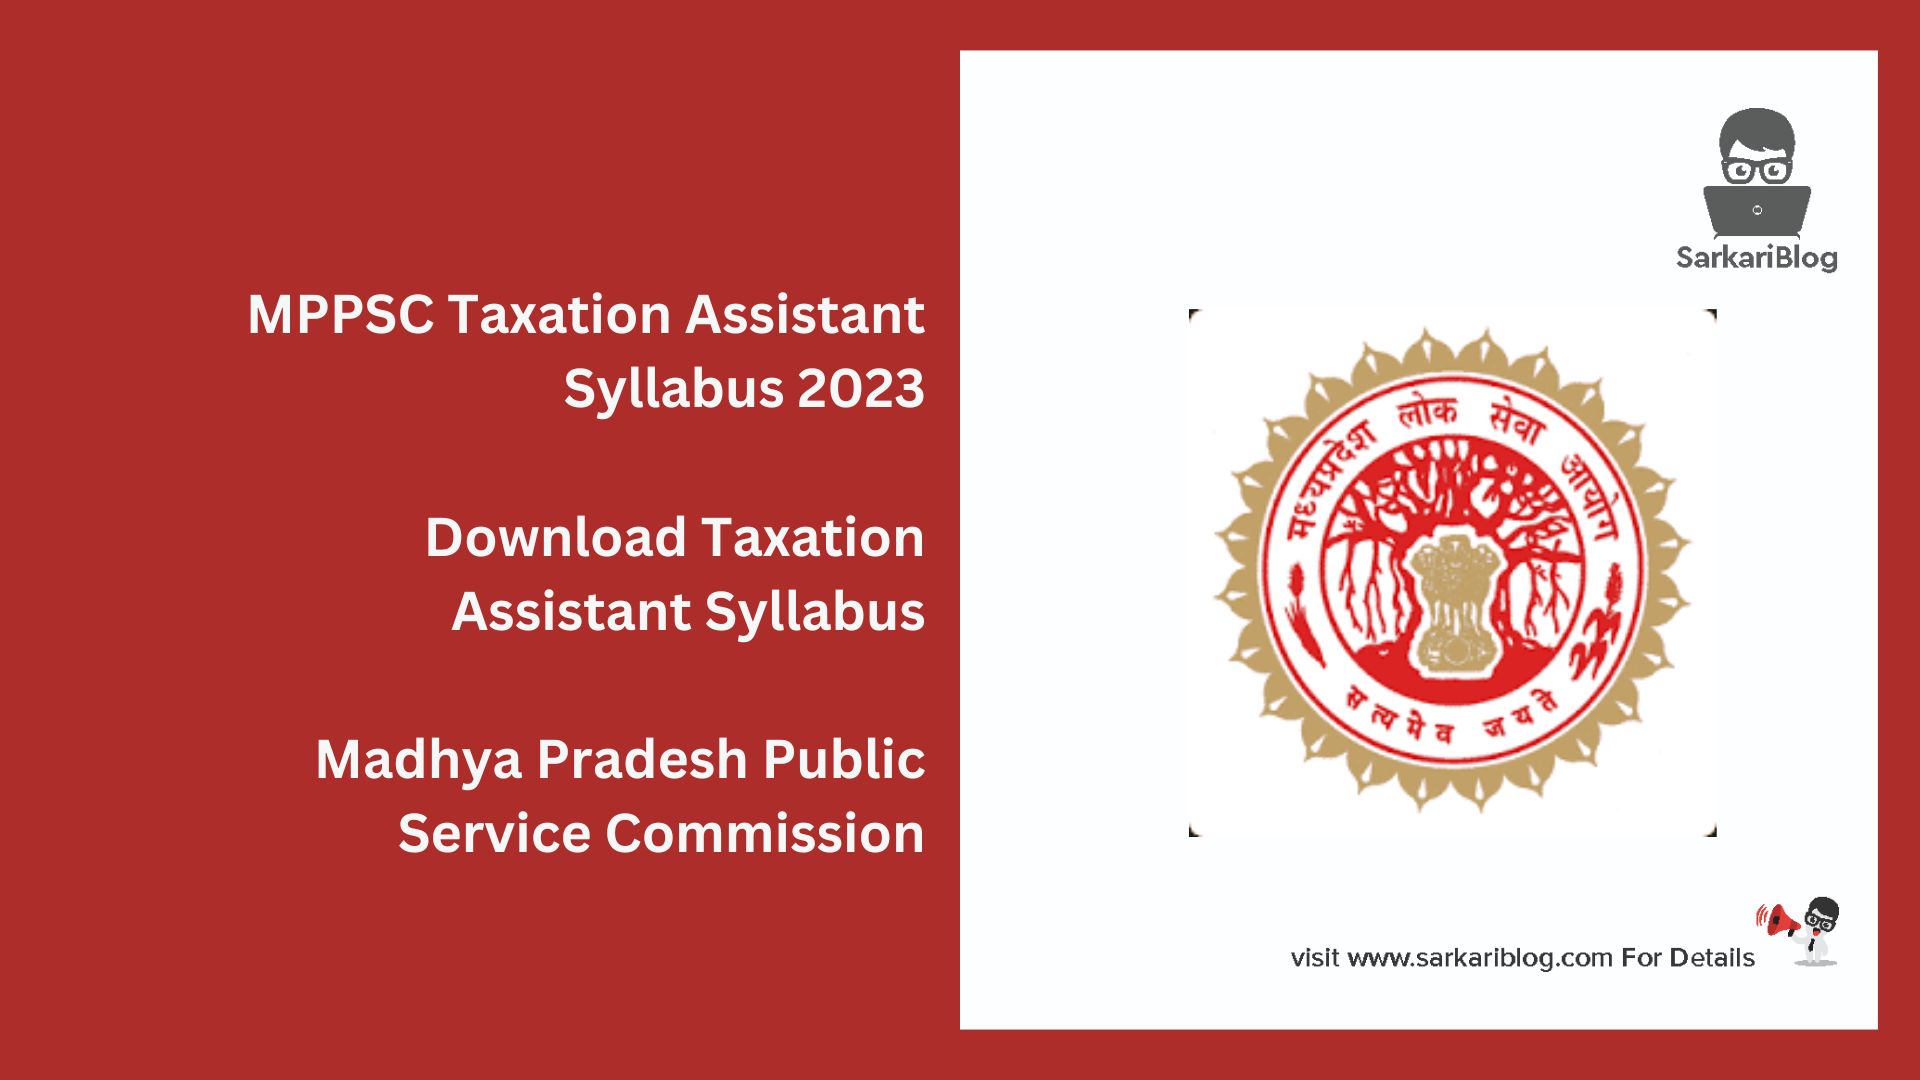 MPPSC Taxation Assistant Syllabus 2023